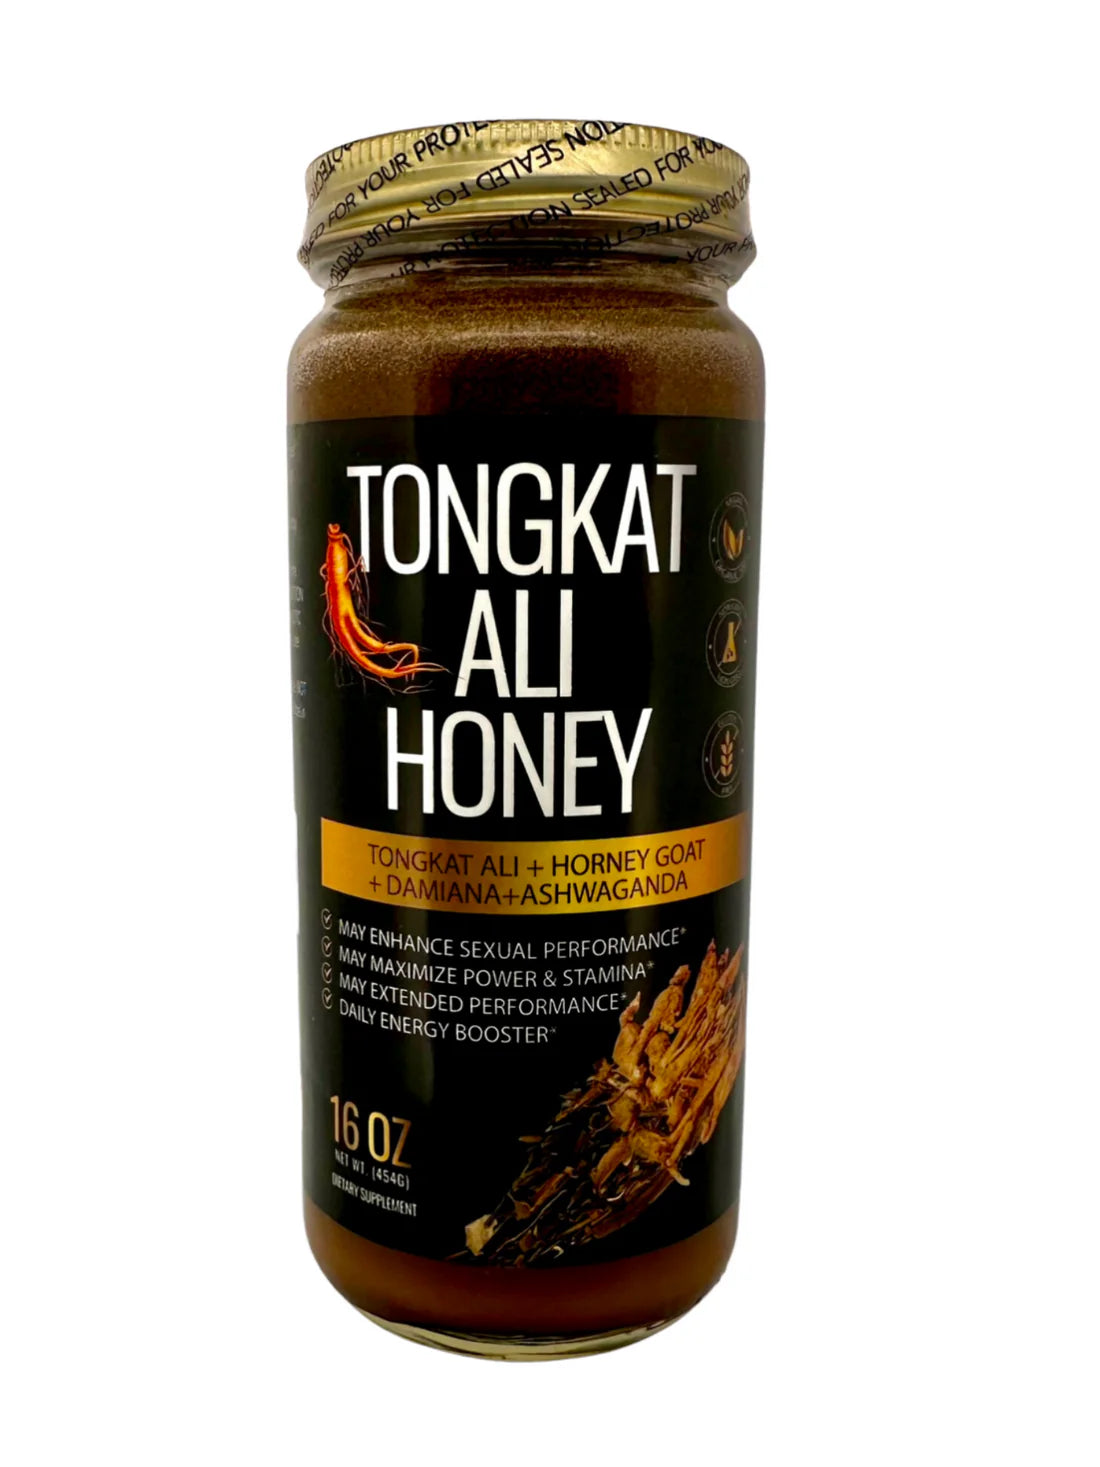 Organic Tongkat Ali HONEY HORNY GOAT Weed Extract Live Life Healthy The Herbal Way